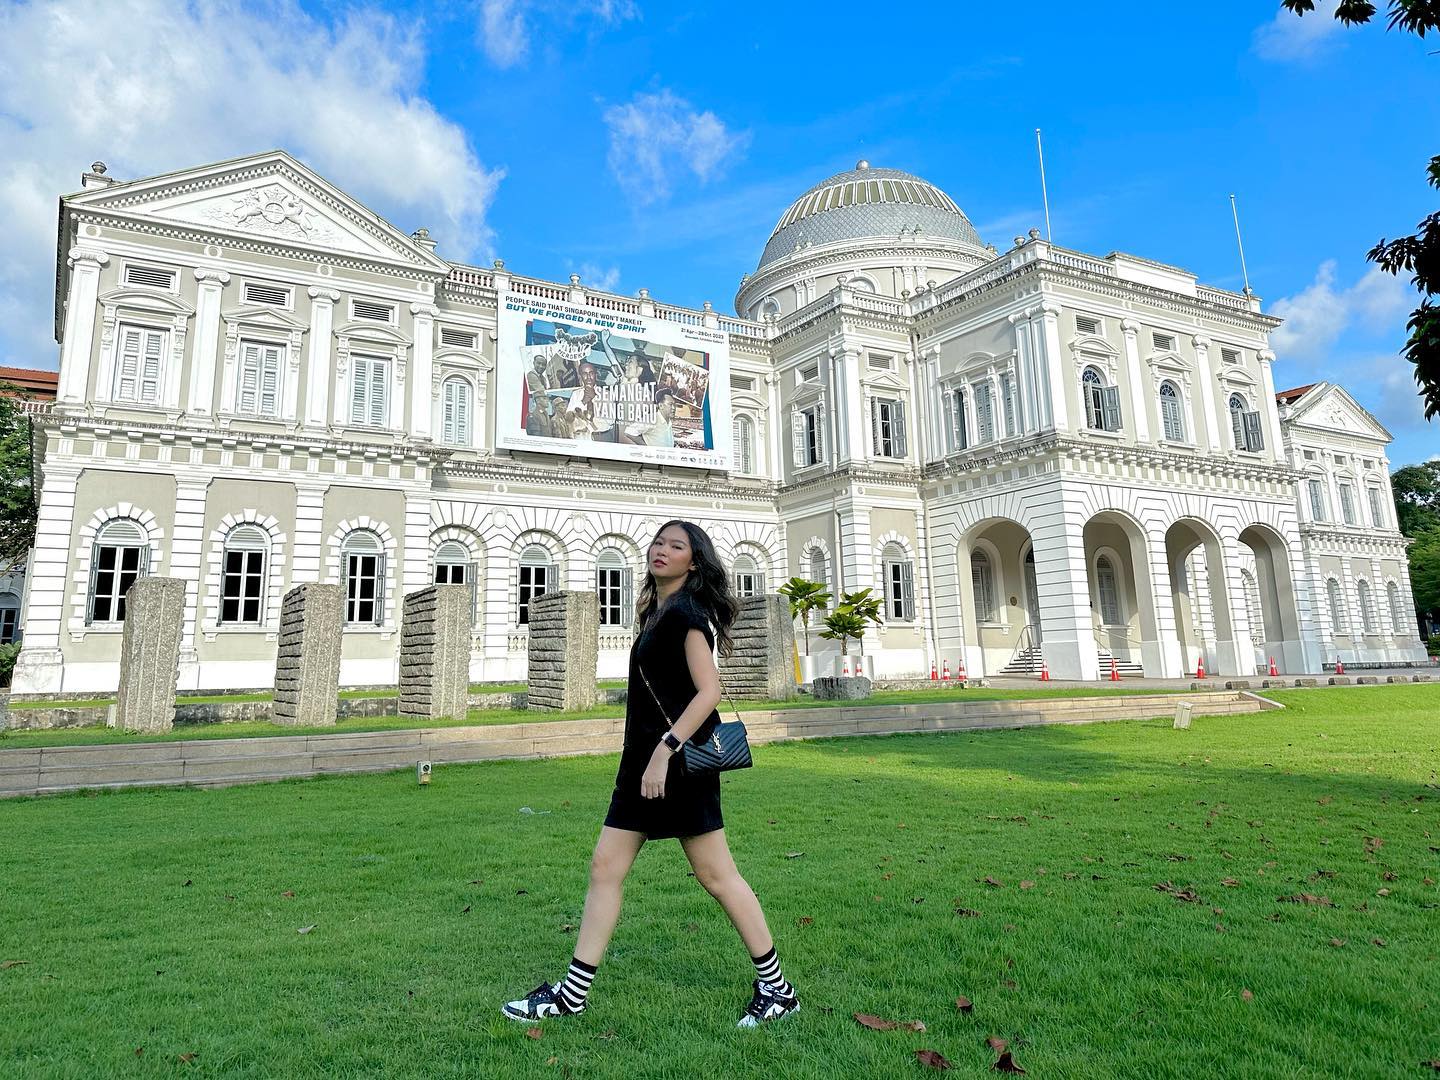 national museum of singapore - building